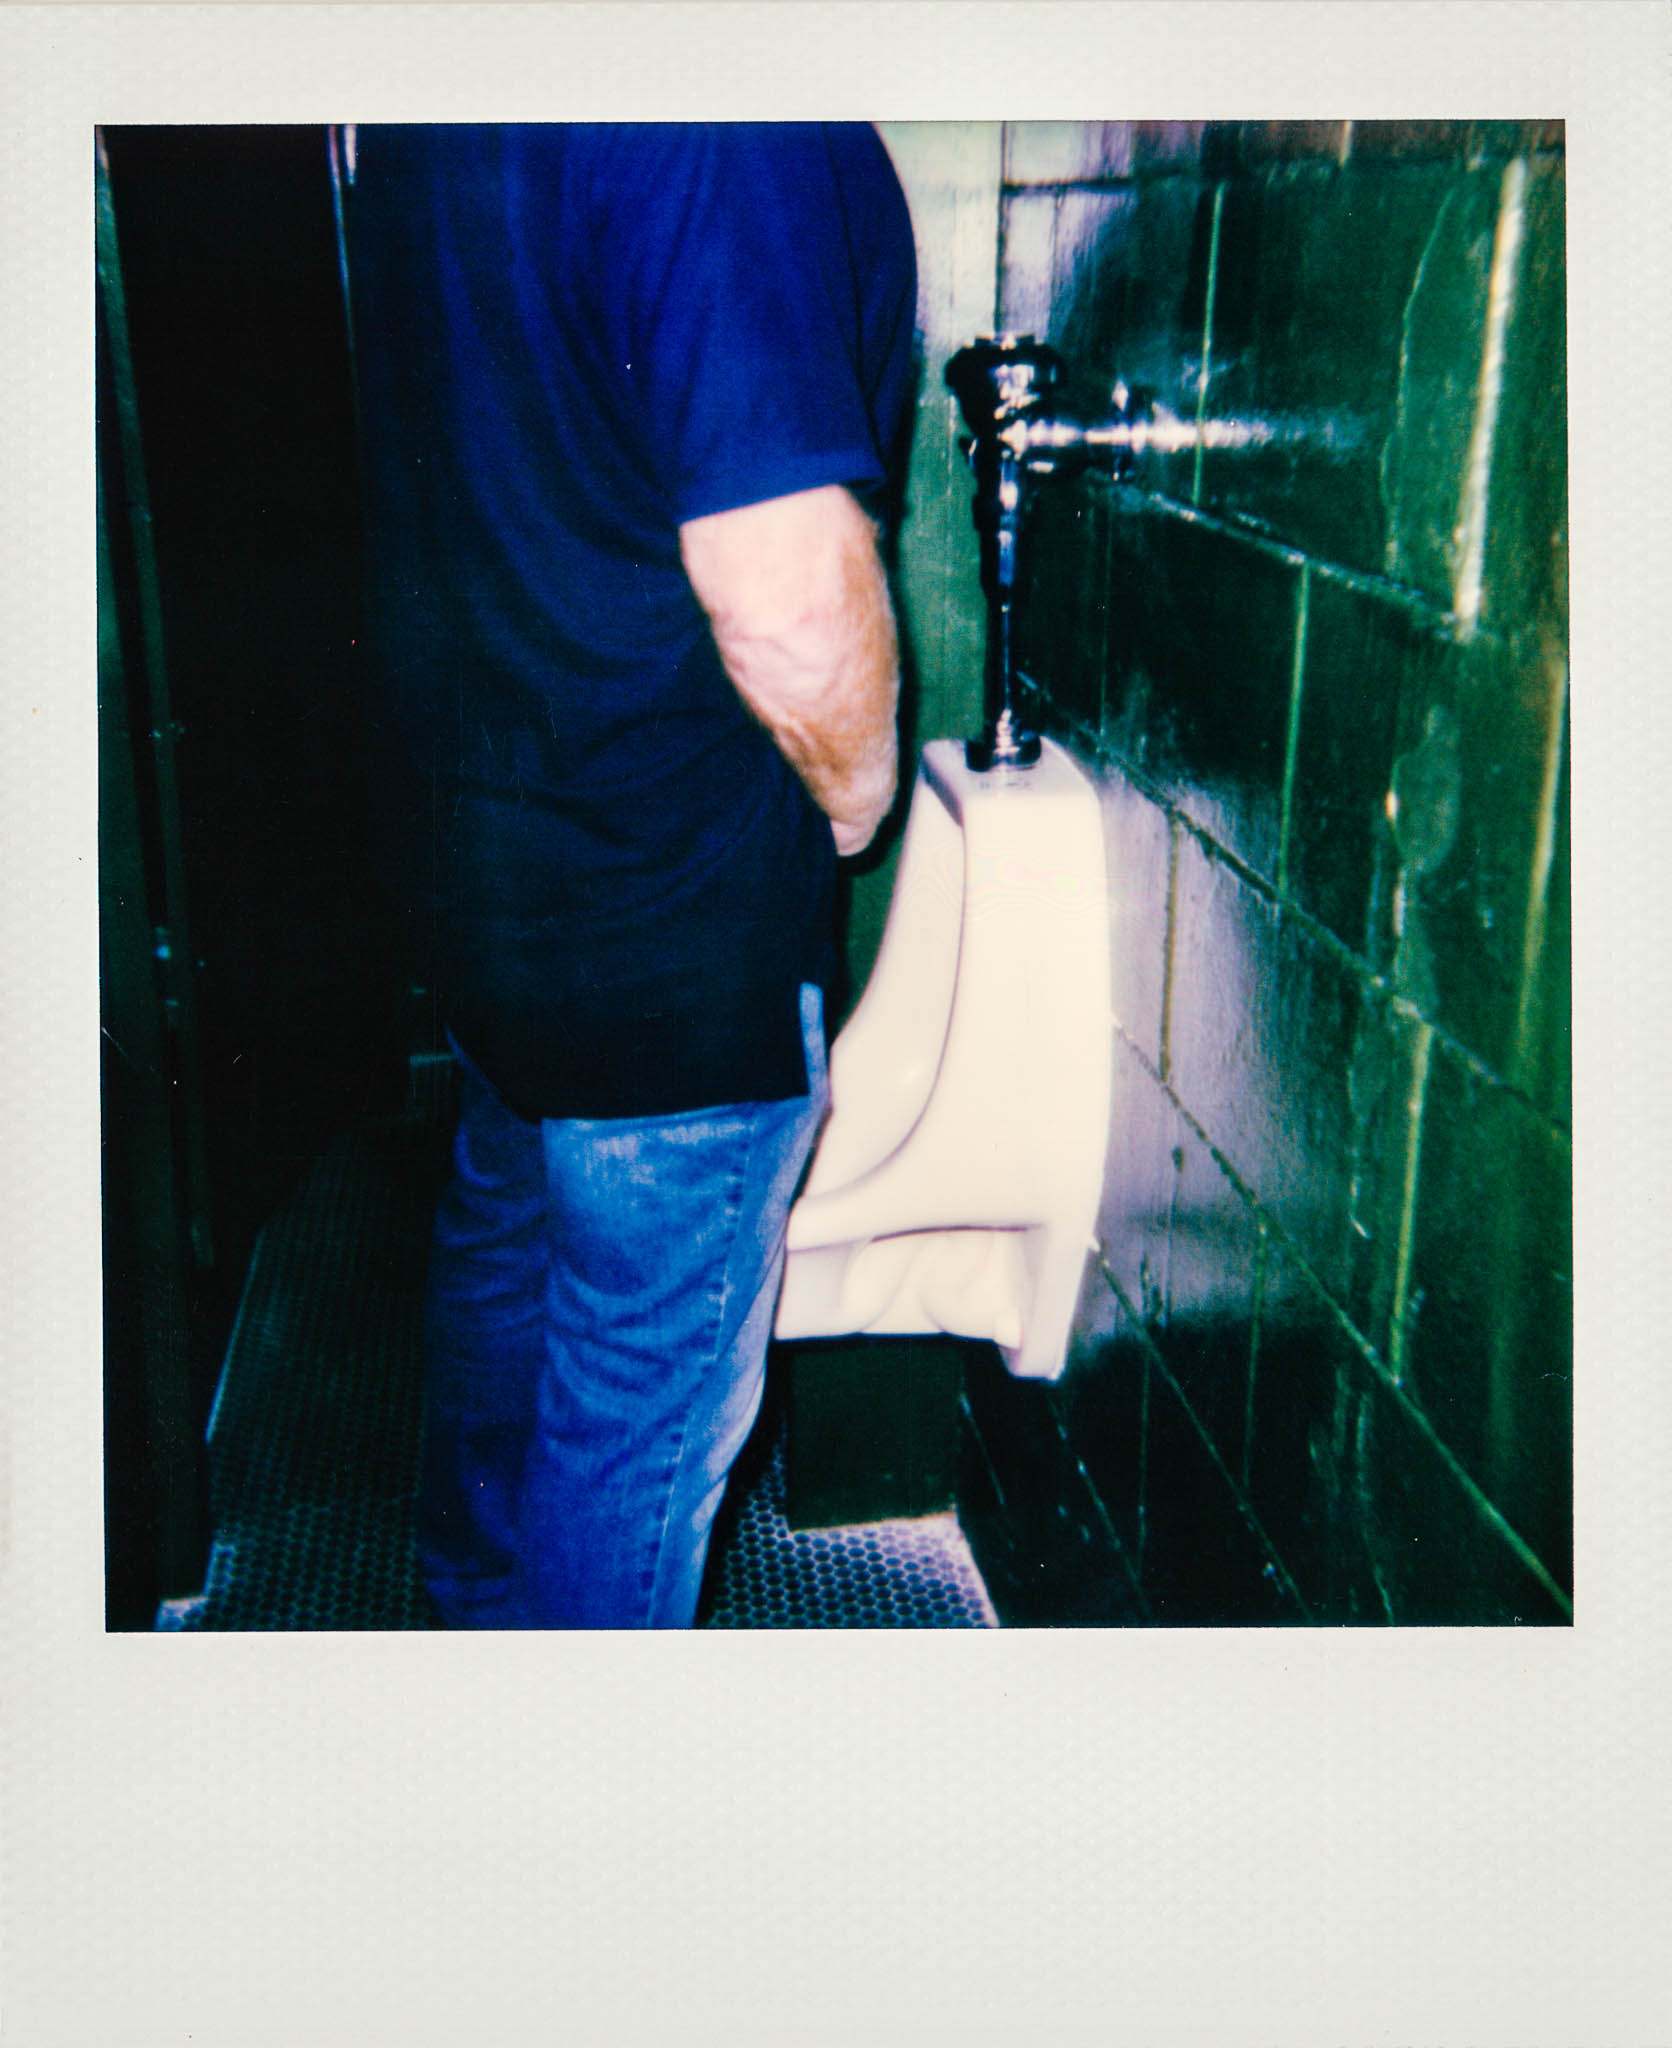 Man peeing in urinal at Wallys Mills Avenue Liquors